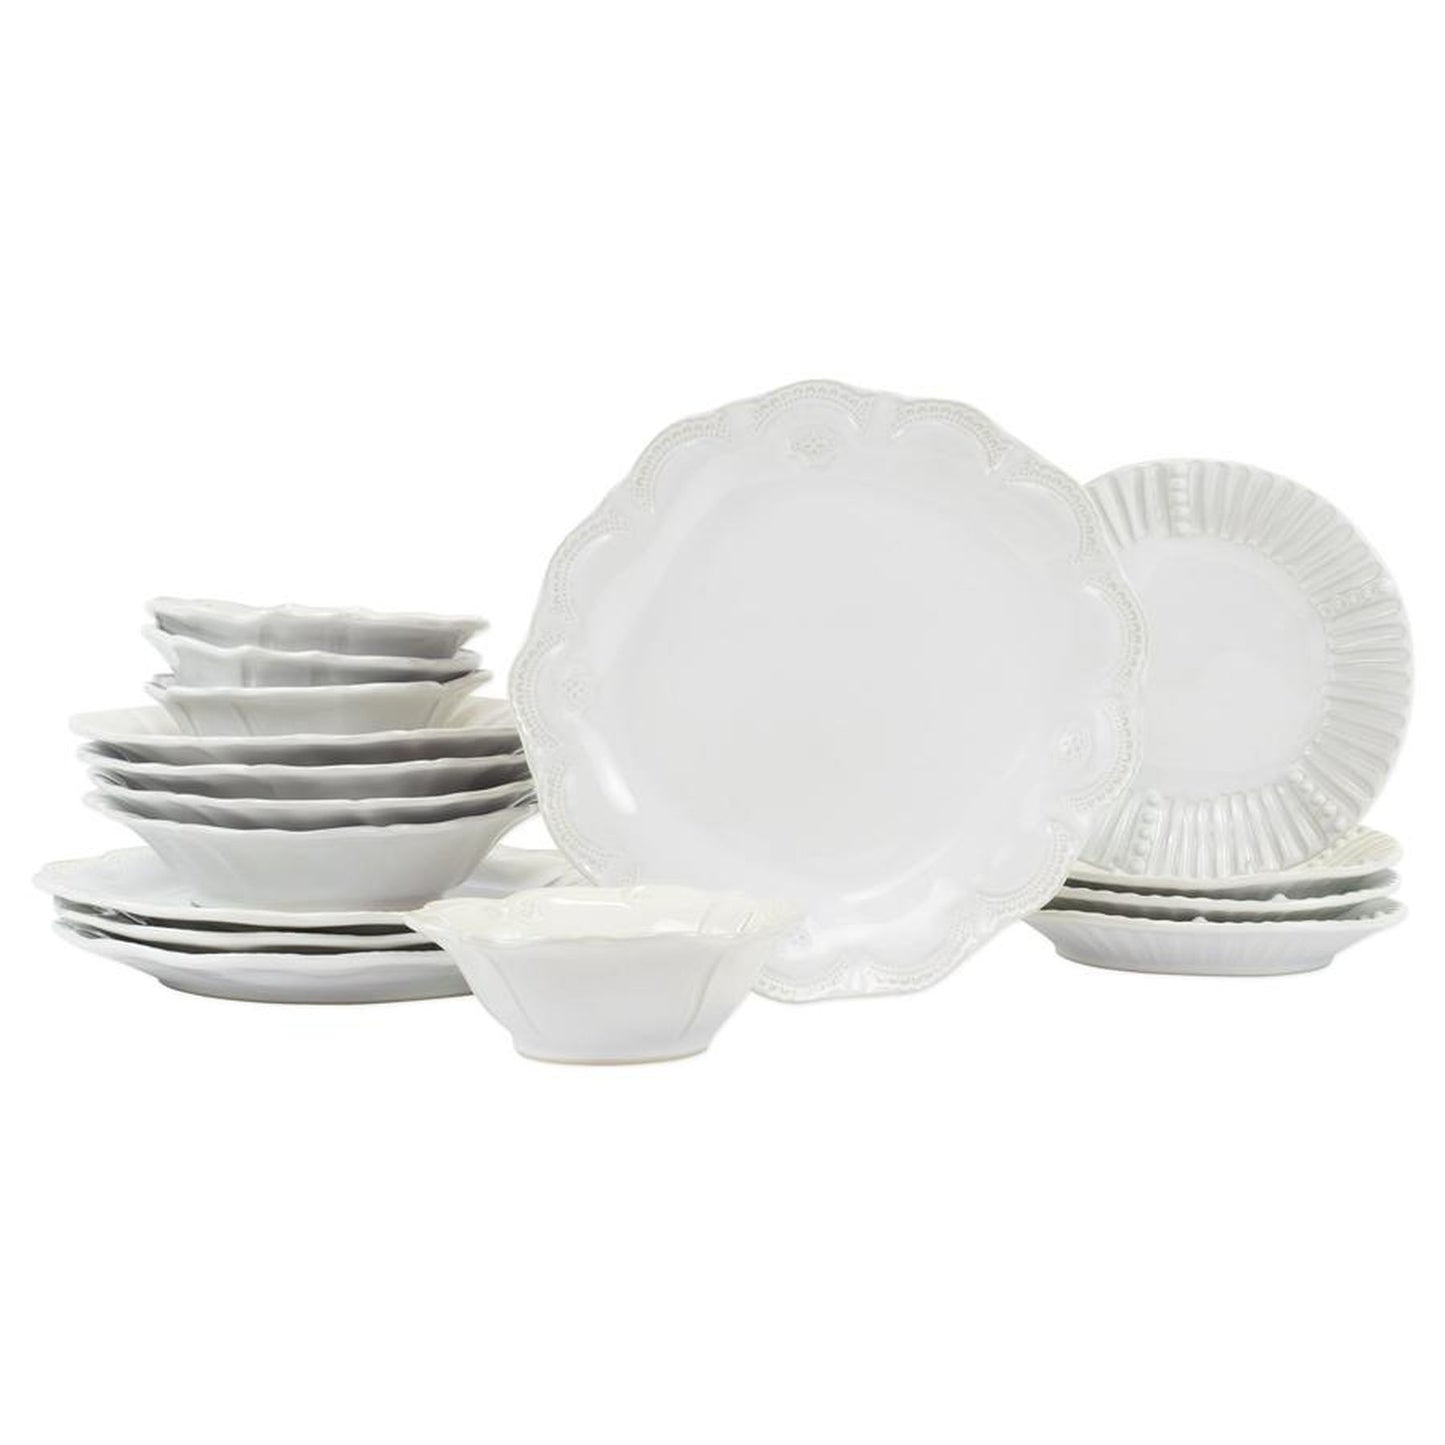 Vietri Incanto Stone White Asstd 16-Pc Dinnerware Set, Stoneware Bowls & Plates